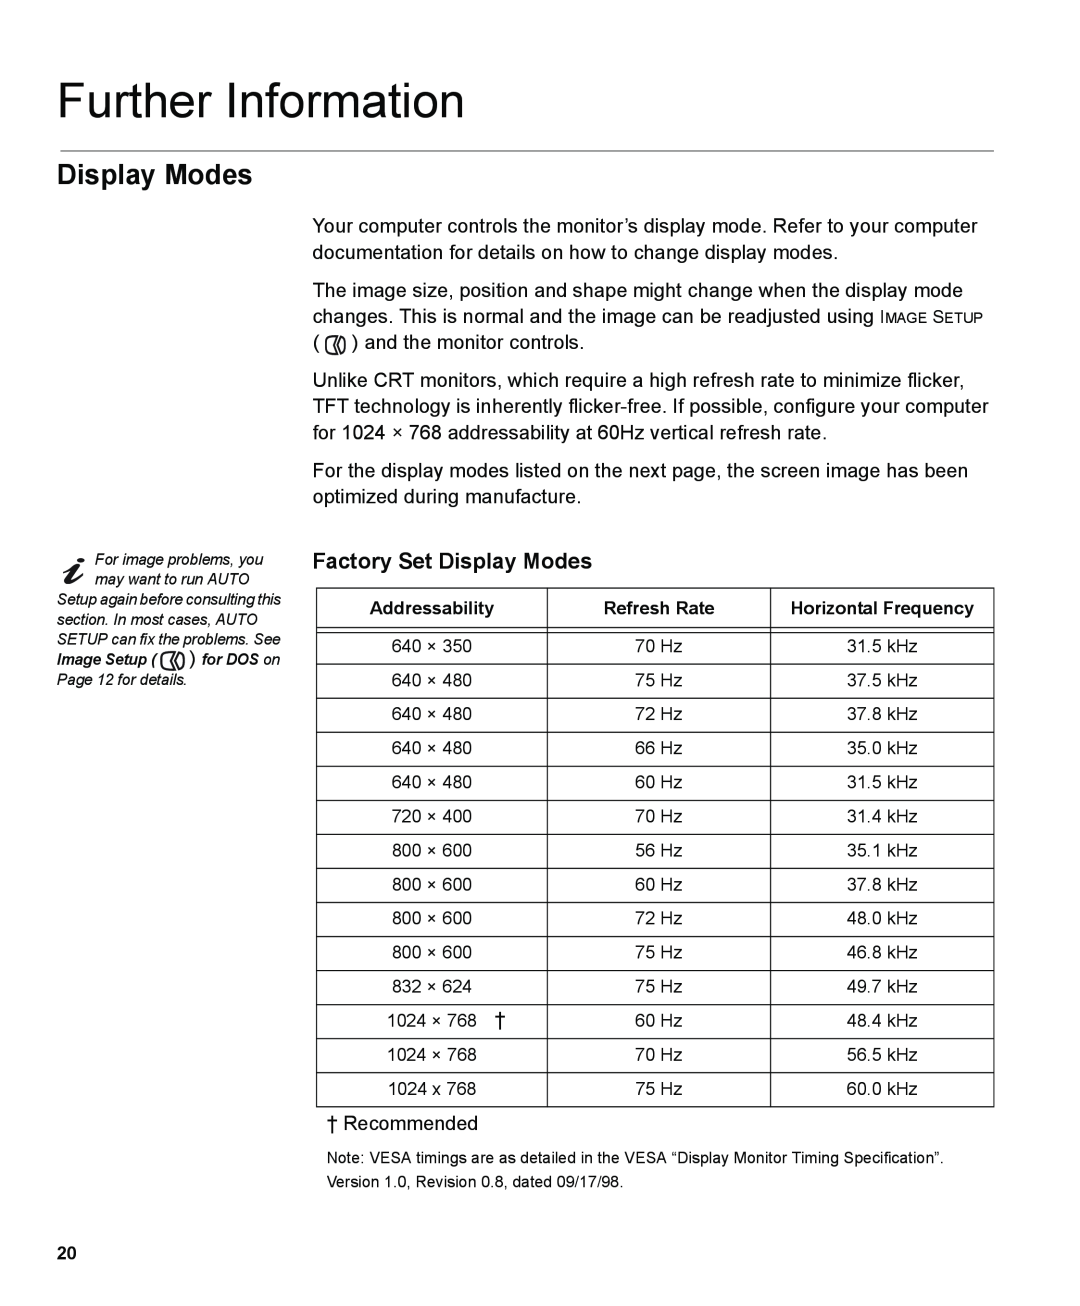 IBM L150 manual Further Information, Factory Set Display Modes 